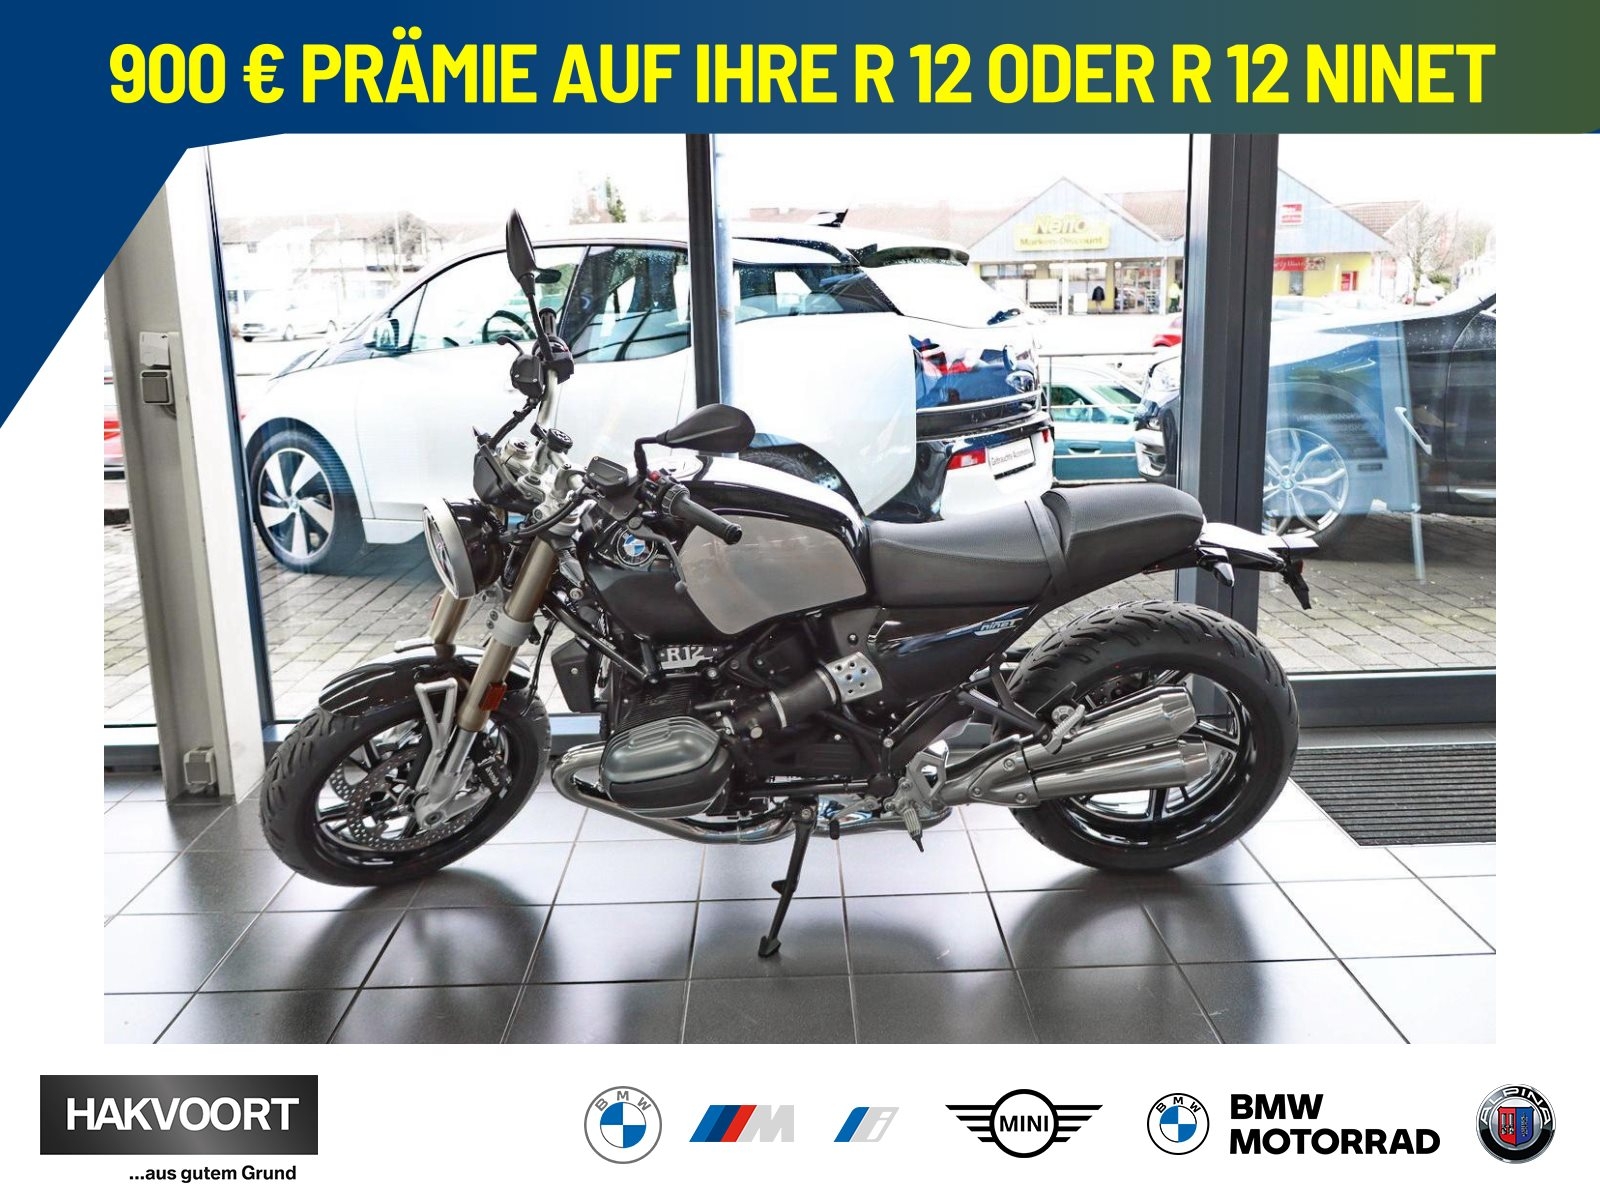 BMW R 12 NineT verfügbar ab 15.07